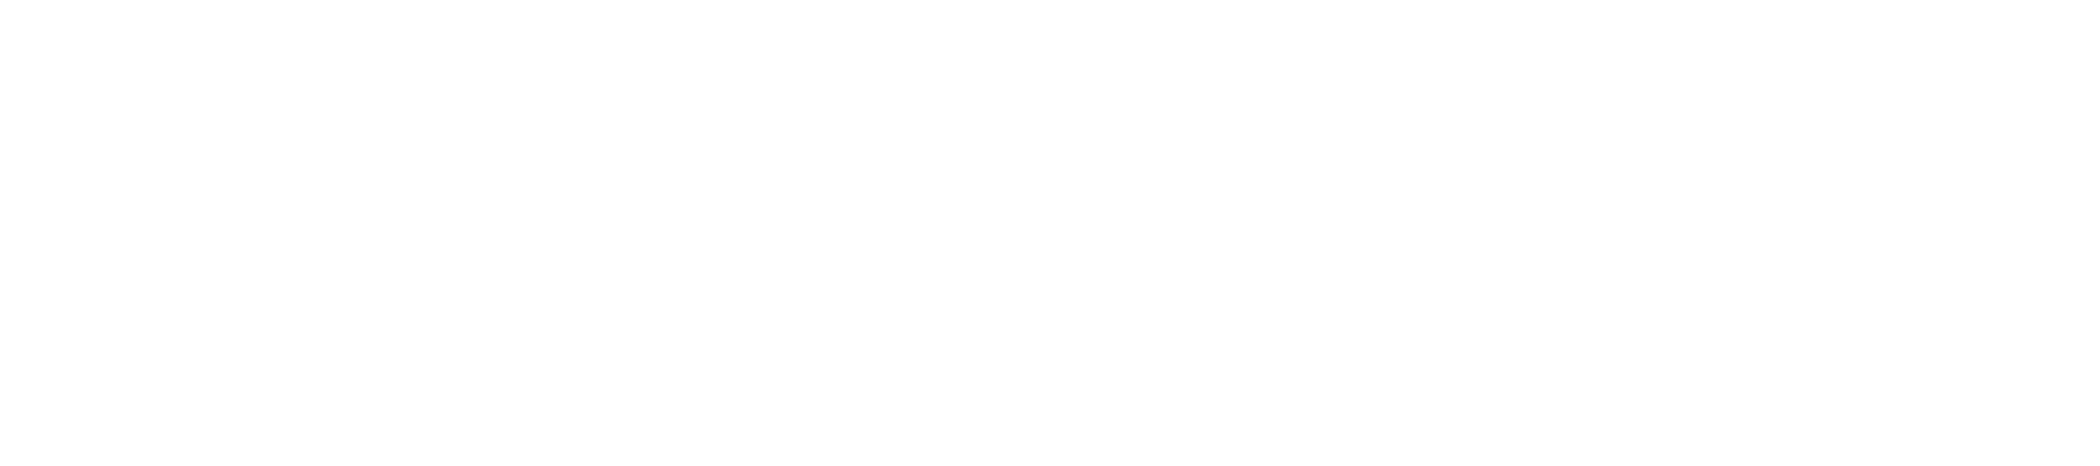 Big-News-Network